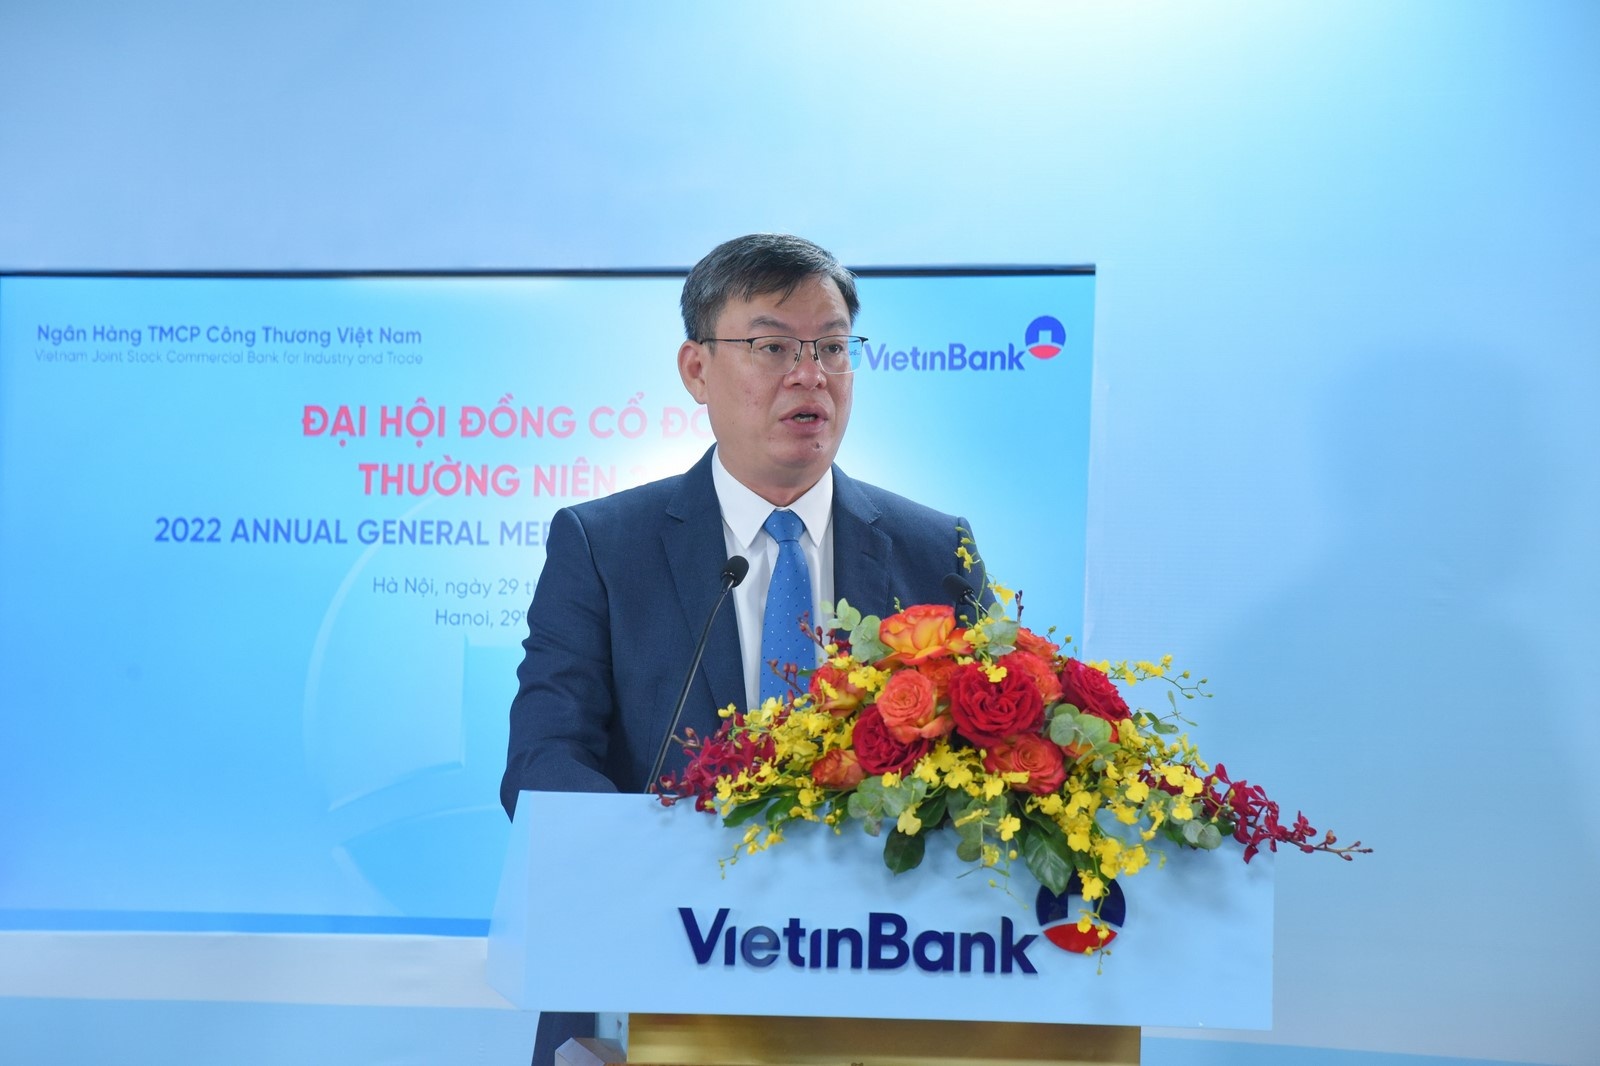 vietinbank to chuc dai hoi dong co dong thuong nien 2022